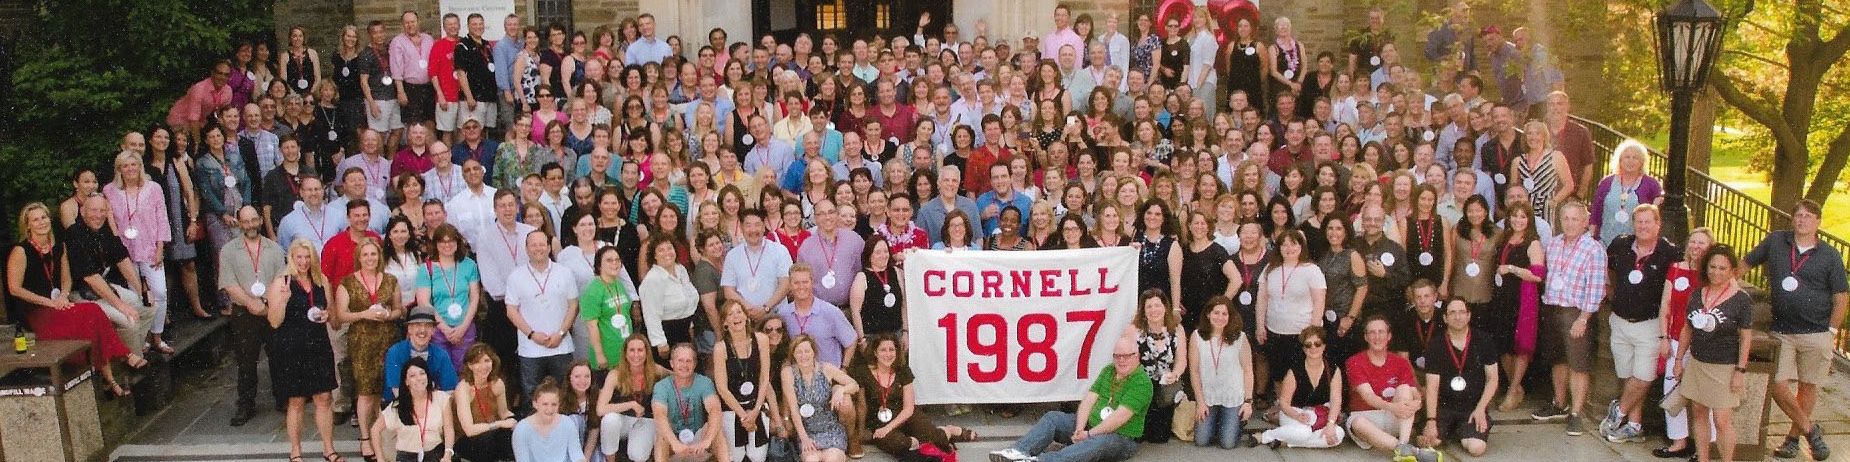 Cornell University Class of 1987